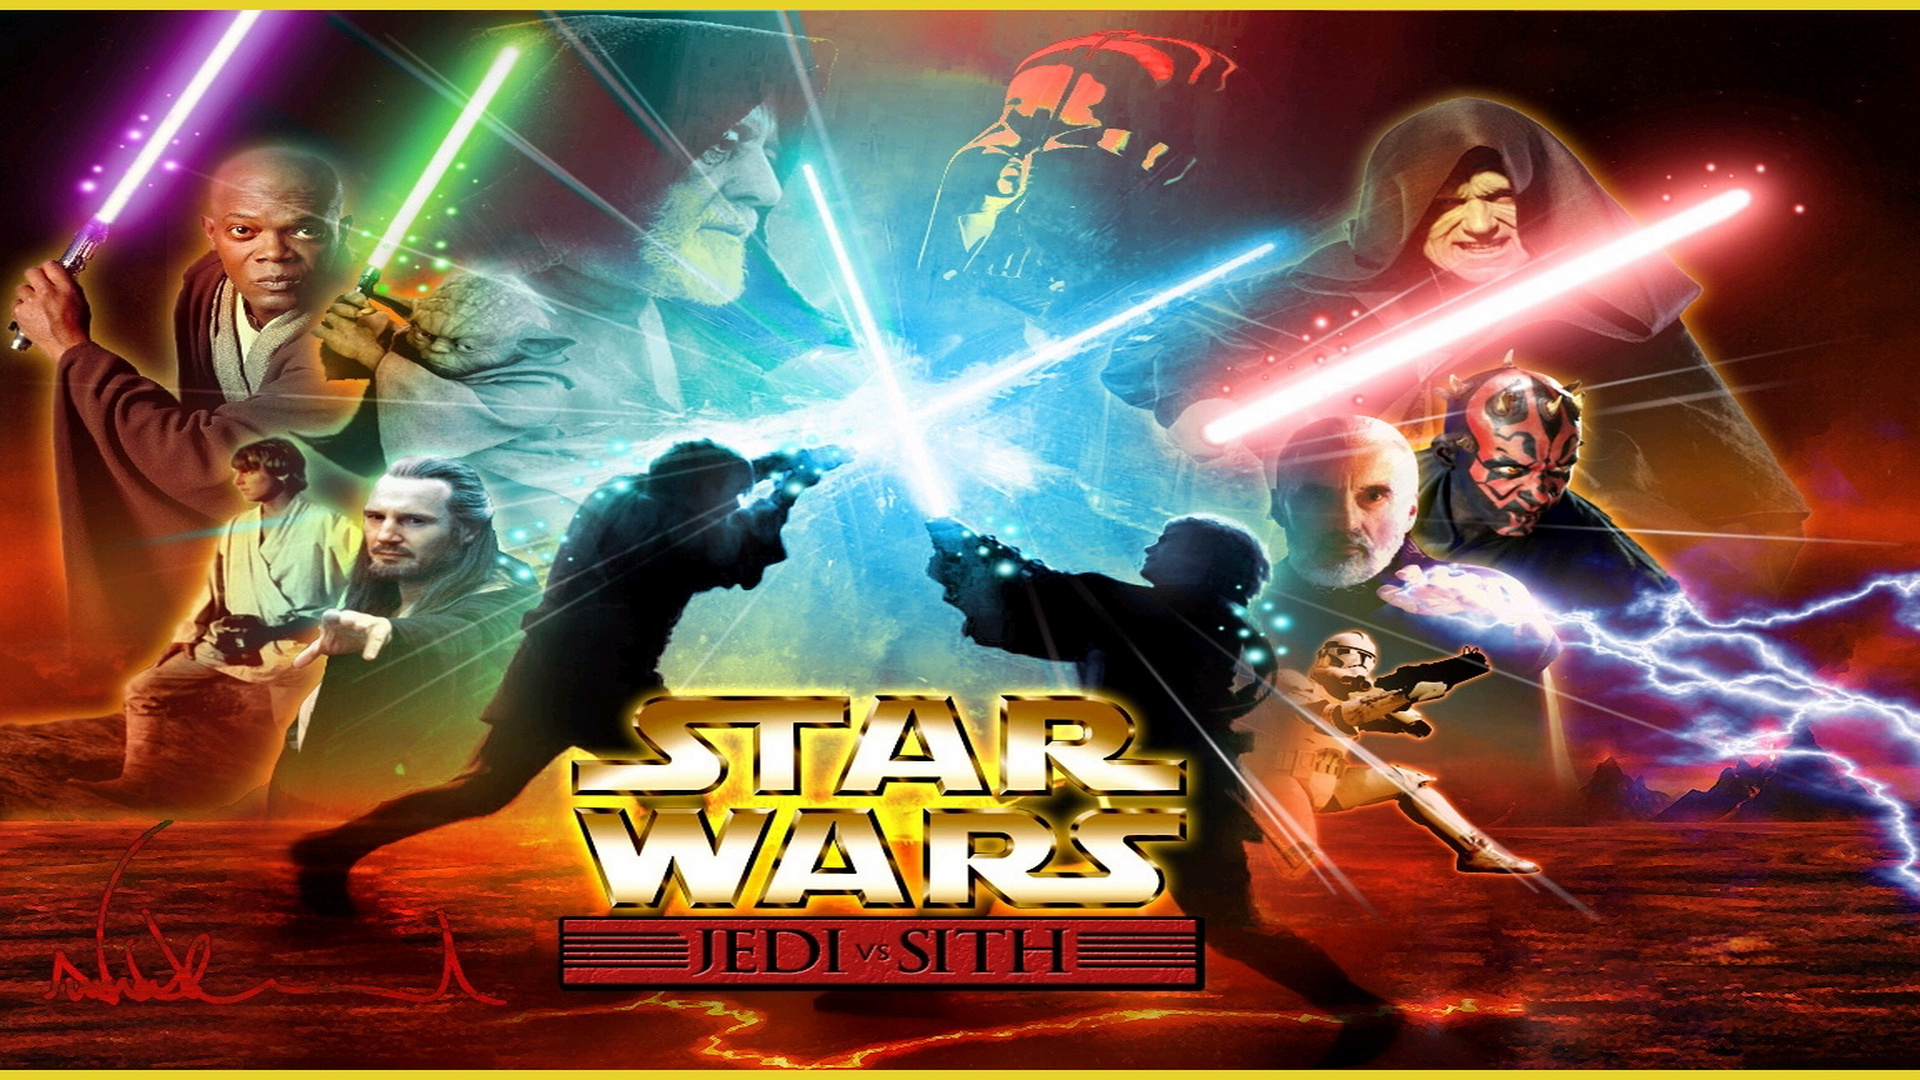 Star Wars Wallpapers Jedi vs Sith star wars 2912035 1152 864 Desktop